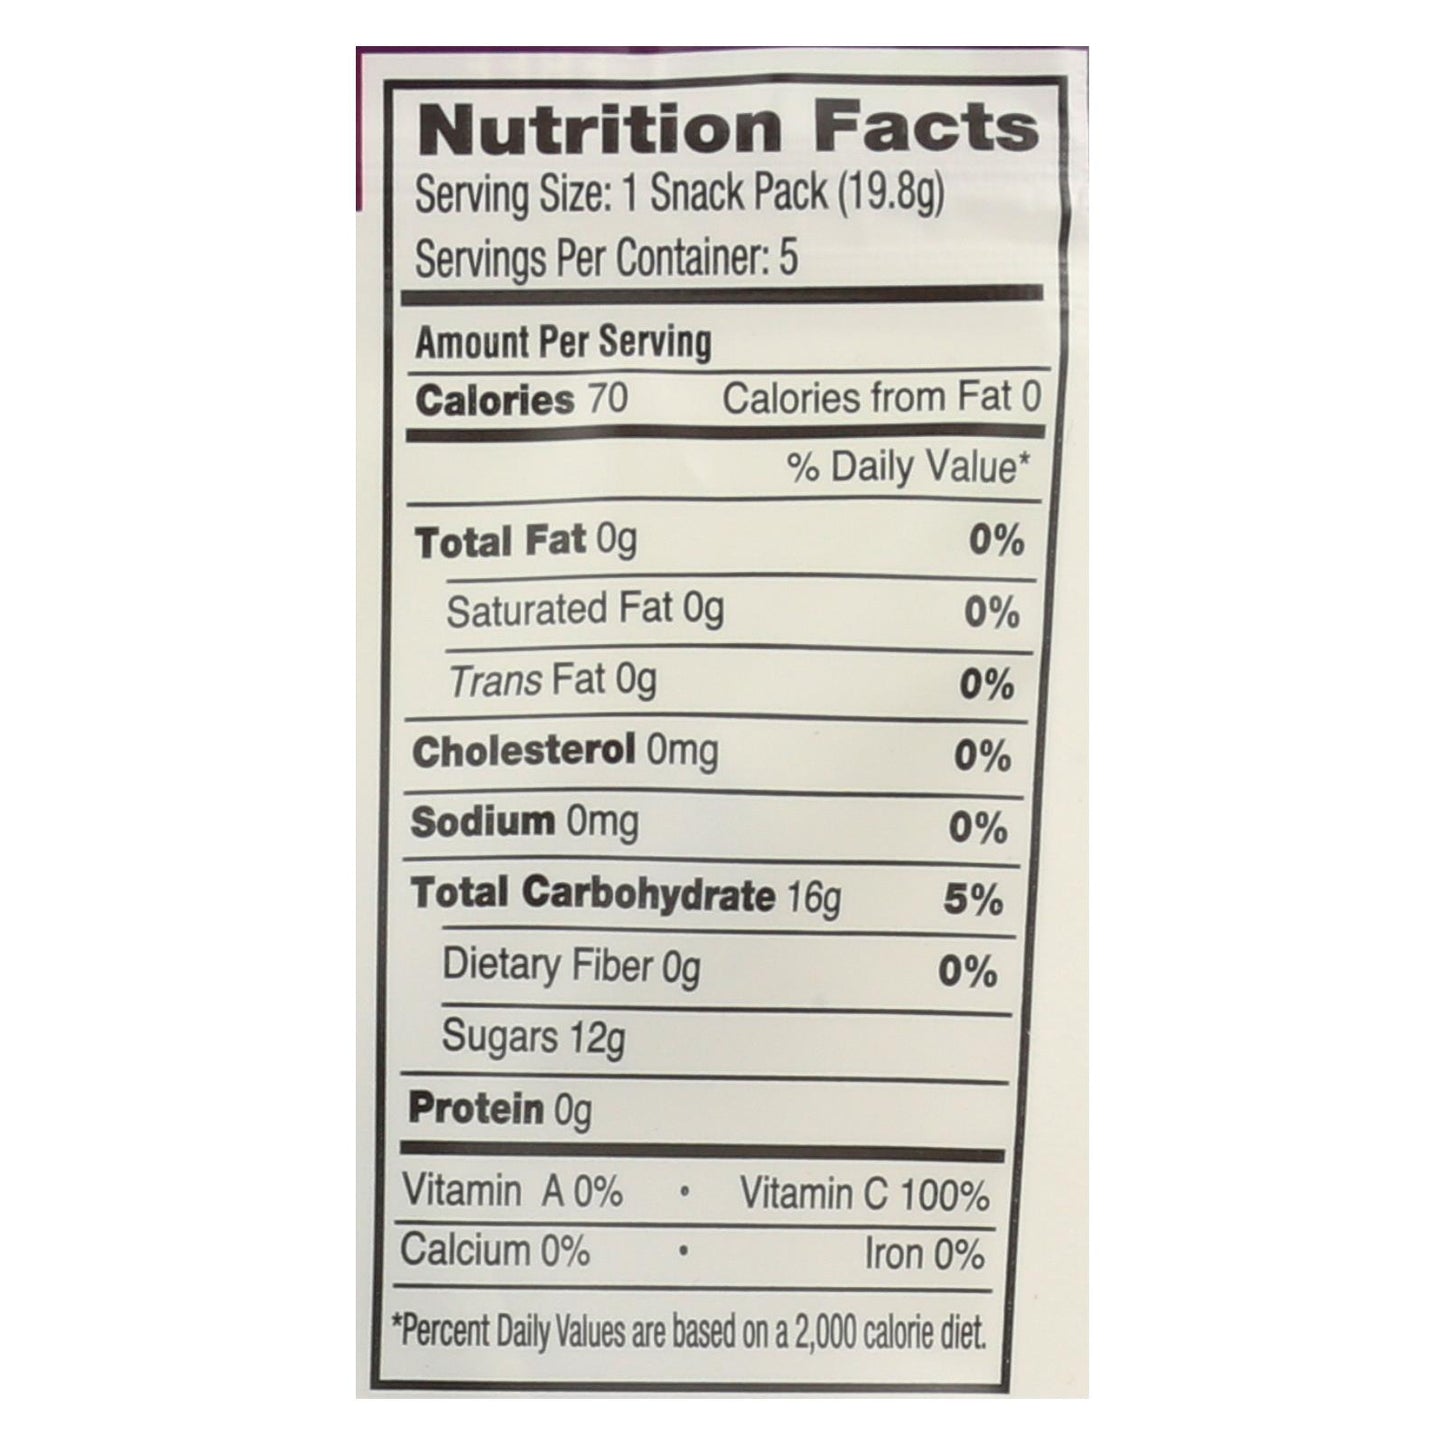 Yumearth Organics Organic - Fruit Snacks - Case Of 12 - 0.7 Oz.